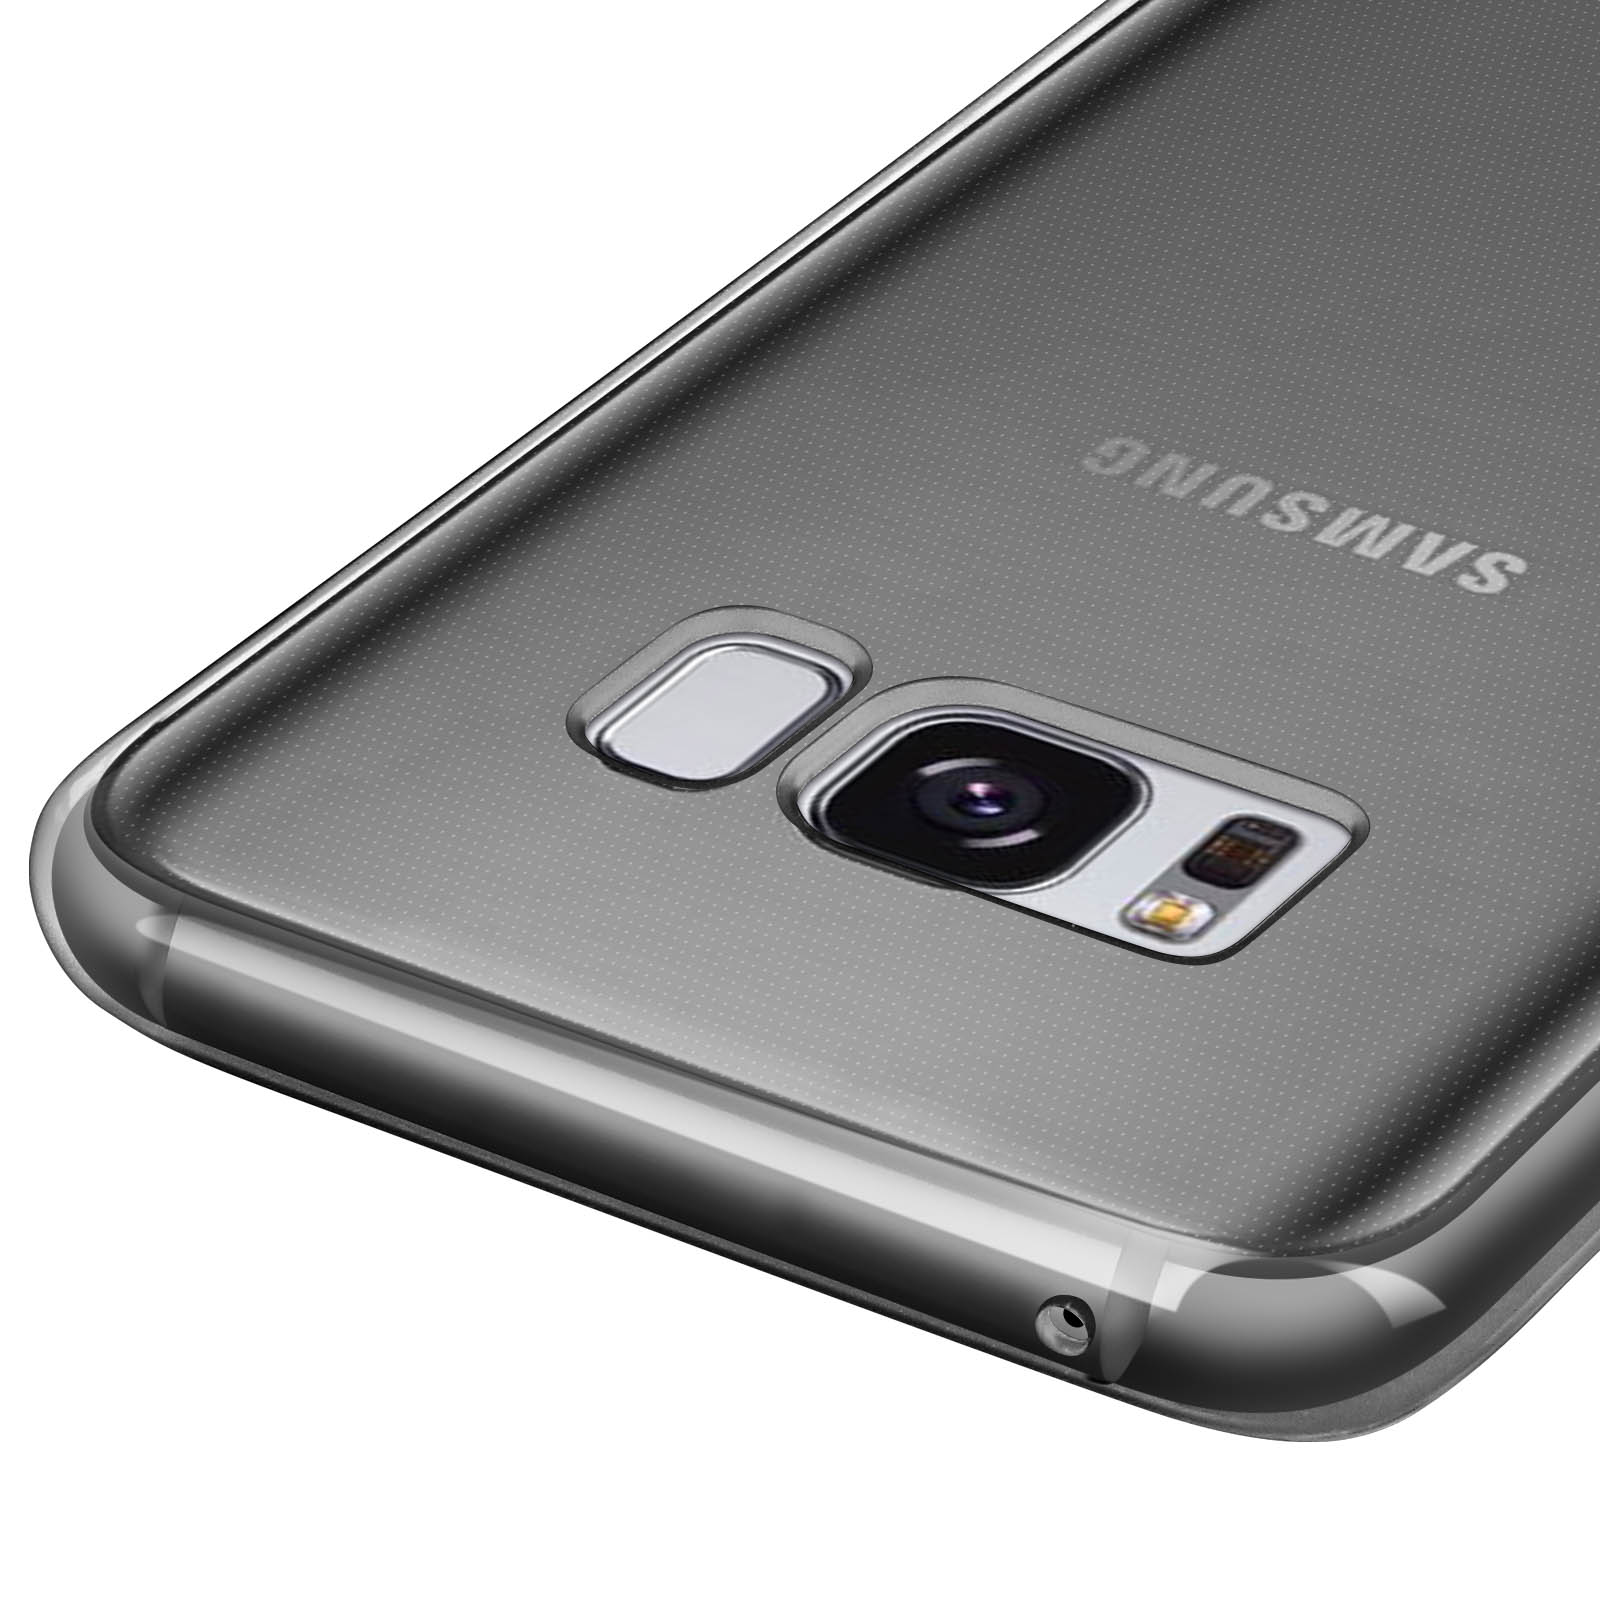 SAMSUNG Galaxy S8 plus klares Cover Plus, Reisekoffer, Galaxy schwarz, Samsung, Schwarz S8